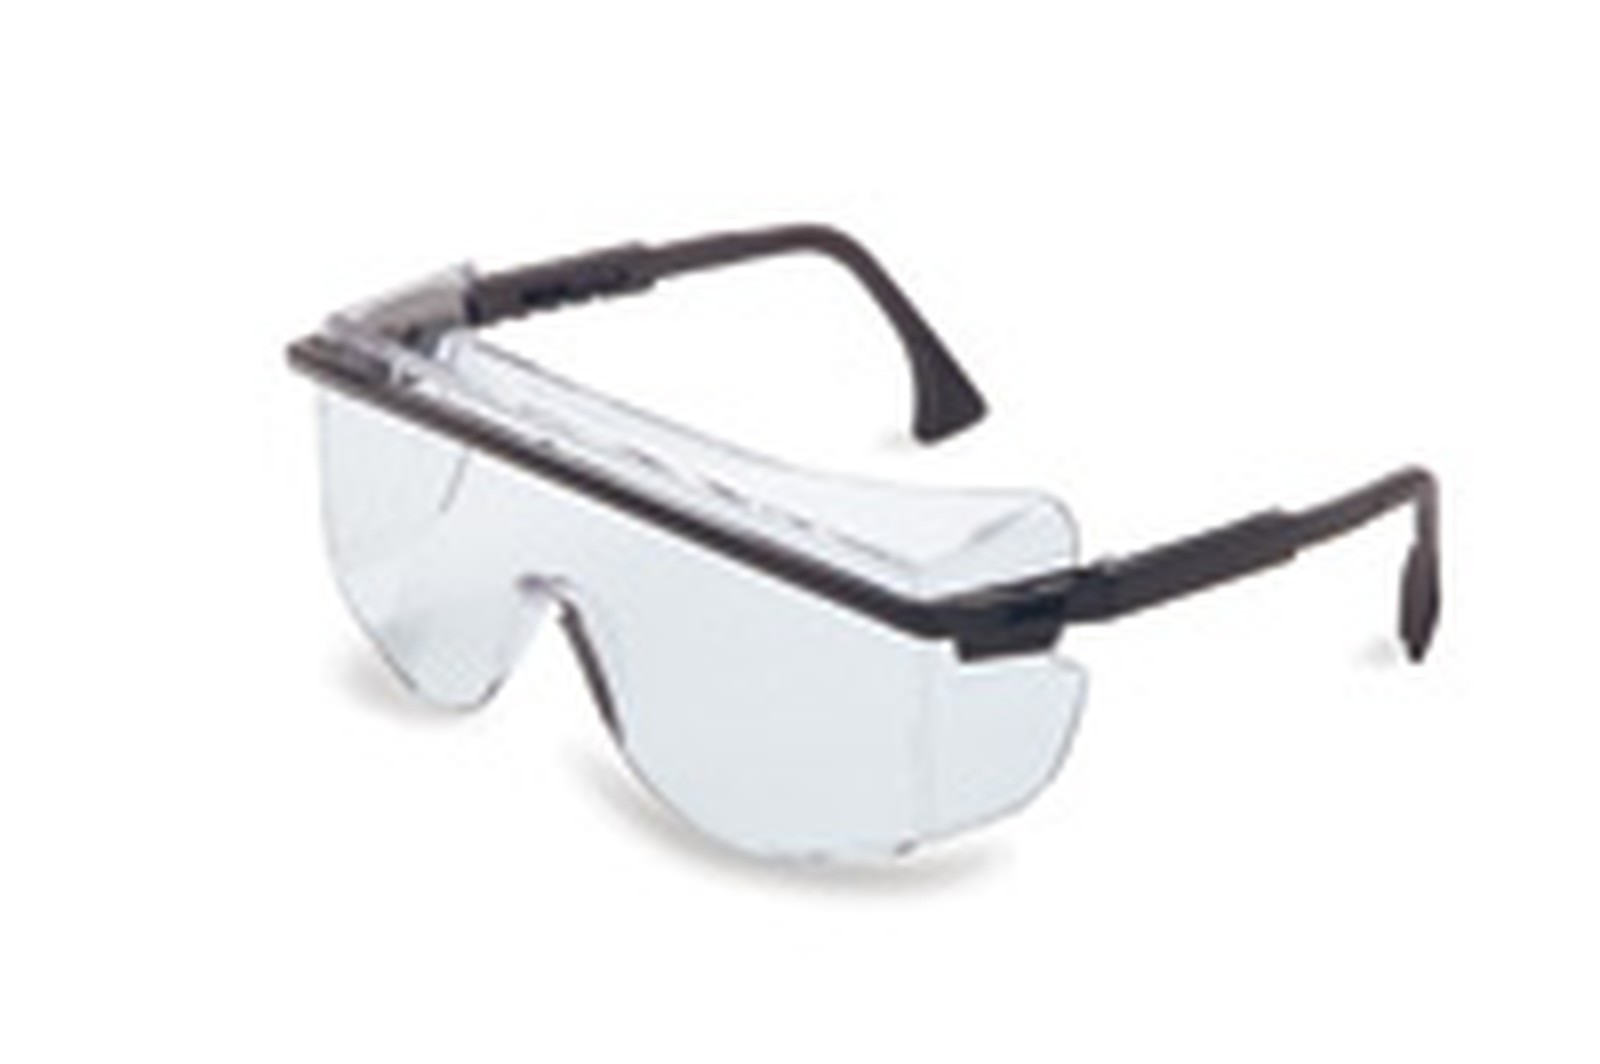 Astro OTG 3001 Wraparound Safety Glasses, Black Plastic Frame, Clear Lens